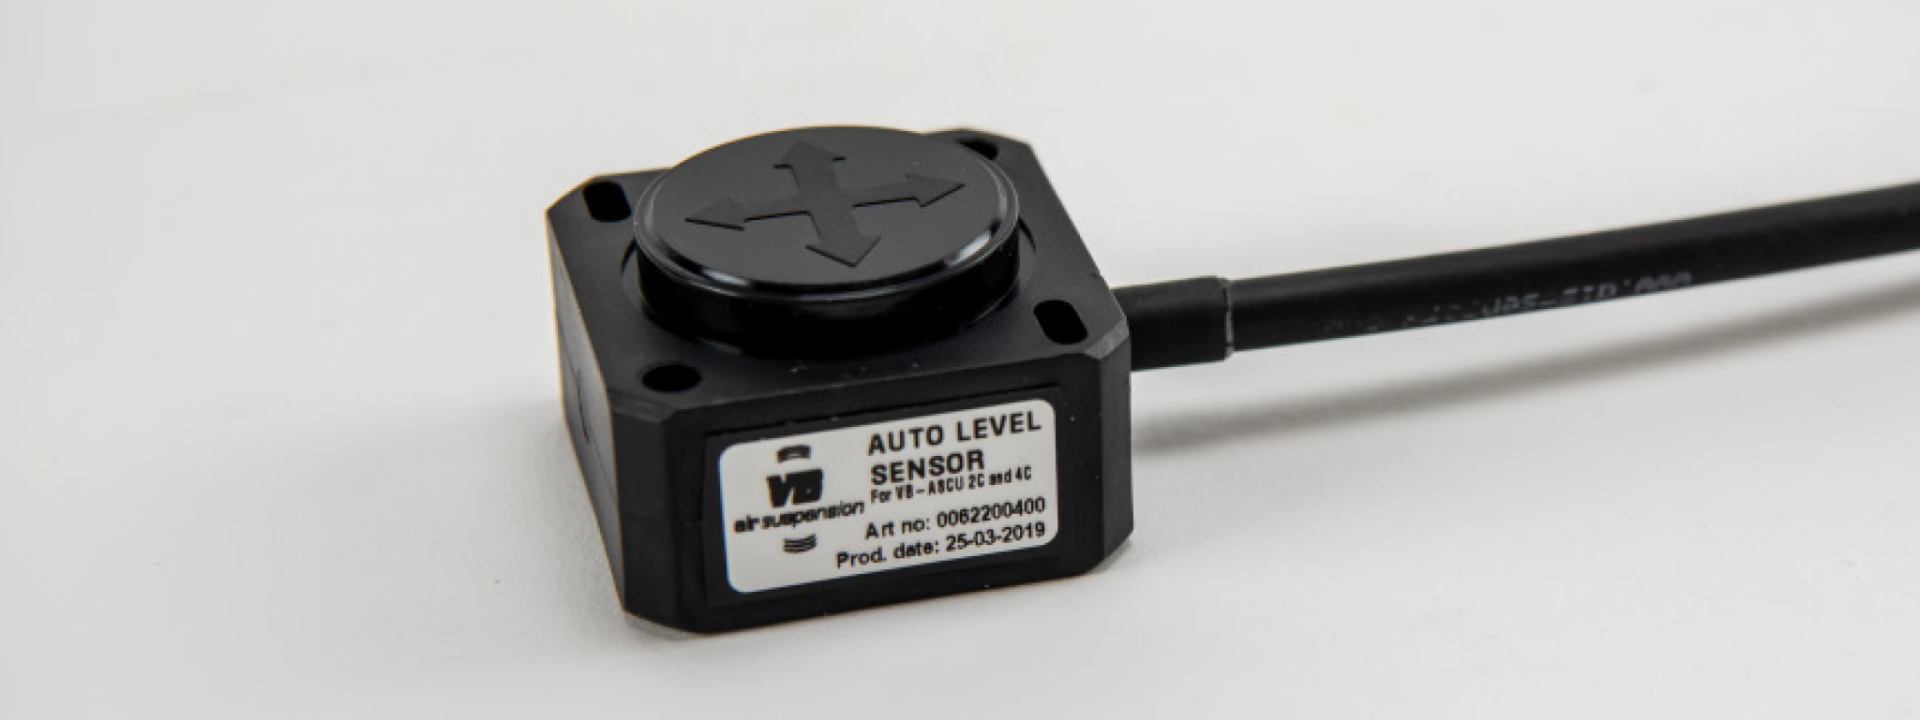 Auto level sensor